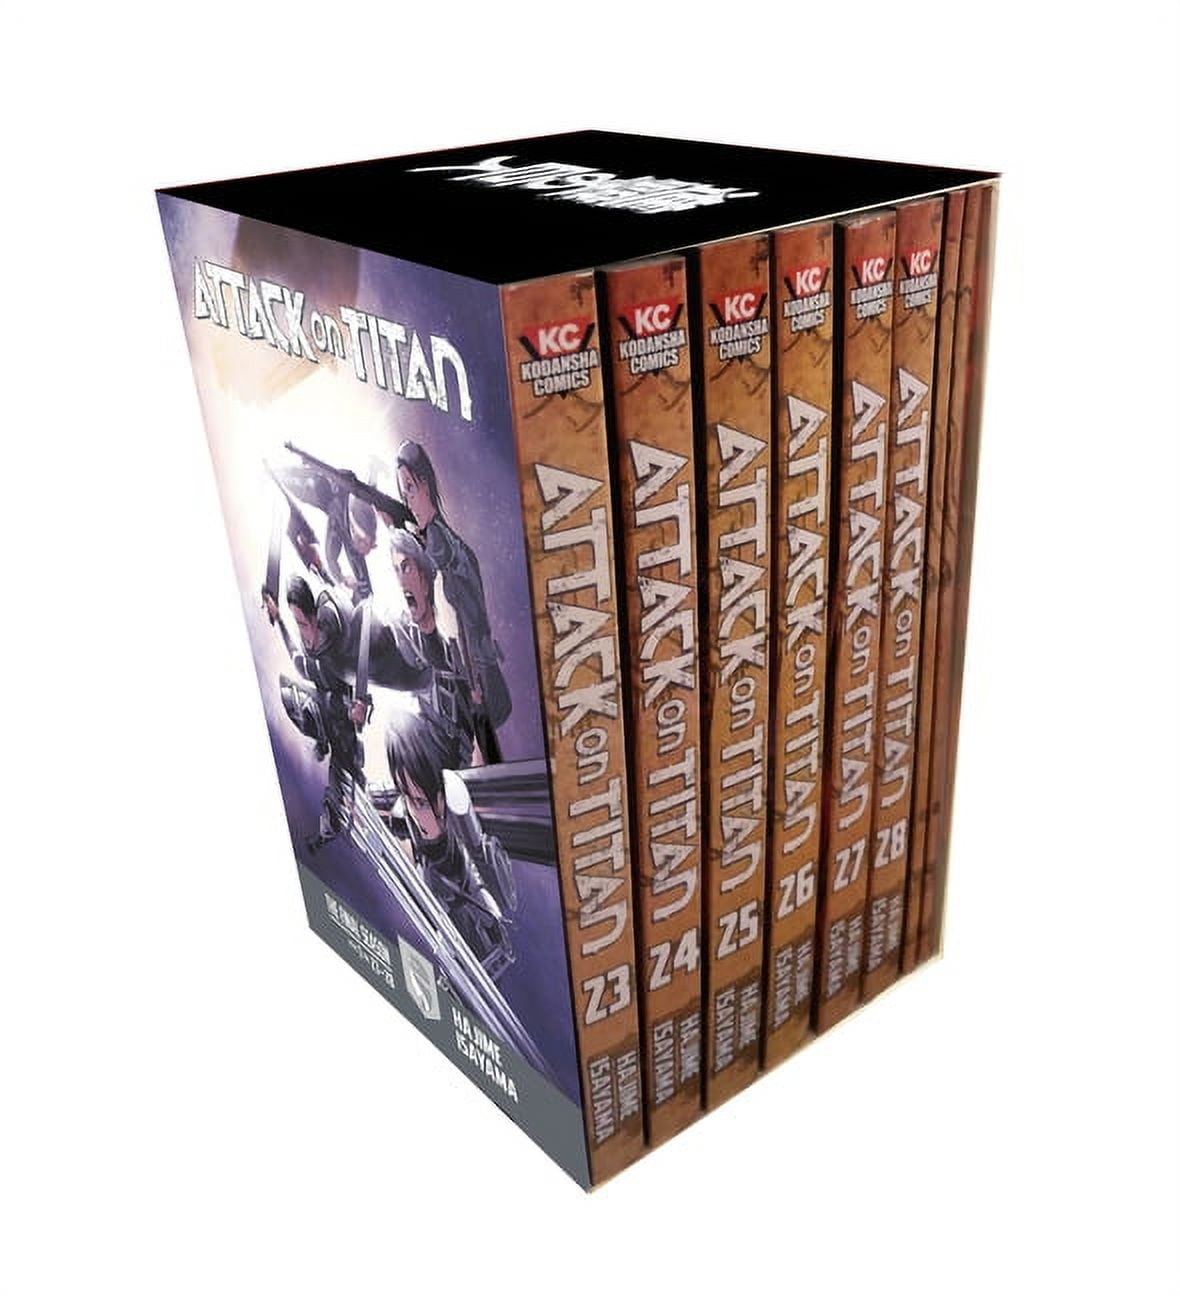 Attack on Titan Season 1 Part 1 Manga Box Set (Attack on Titan Manga Box  Sets)